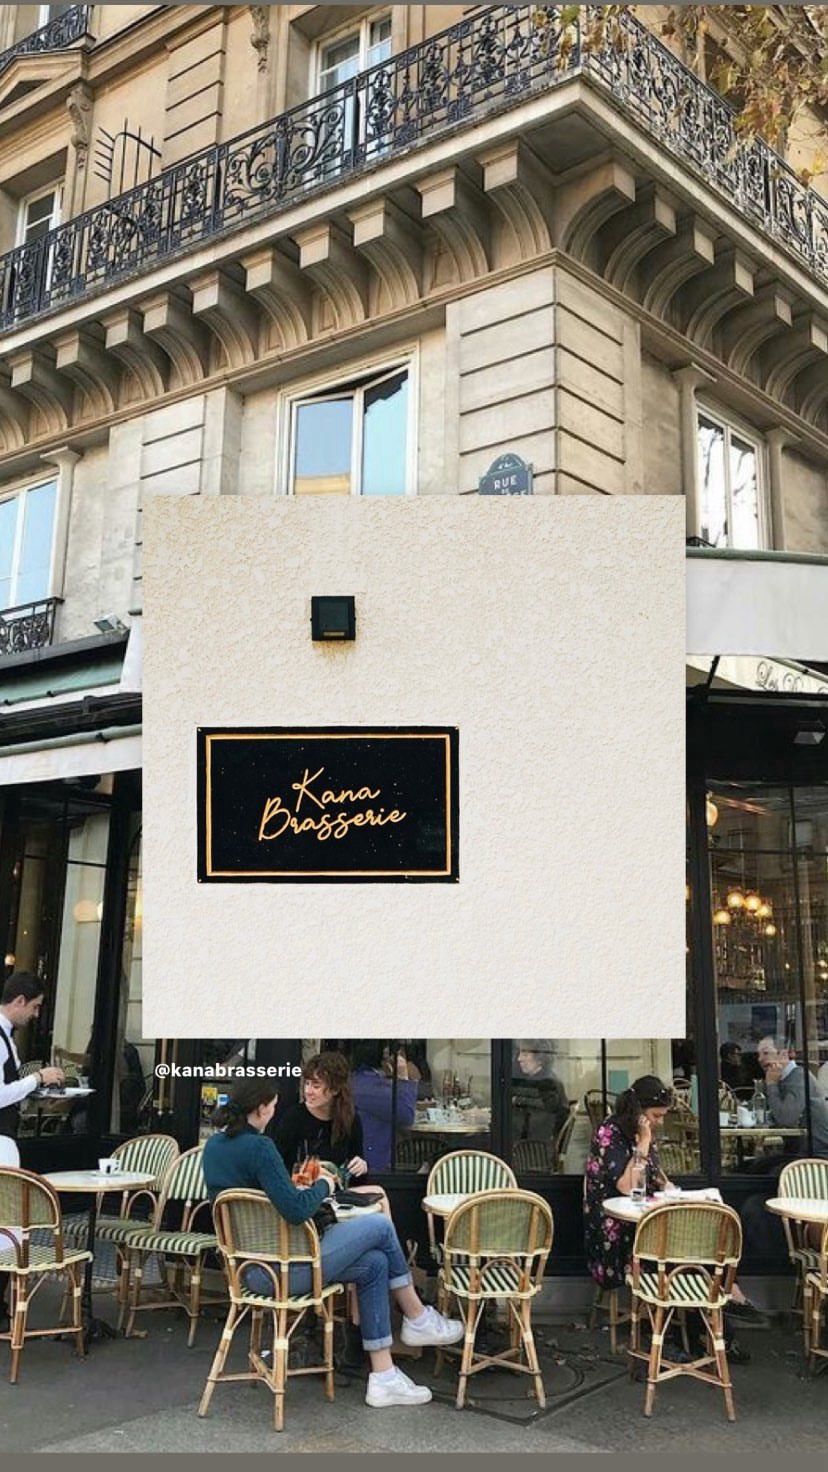 Mas Apredo on LinkedIn: Have you ever heard of Brasserie? Brasserie is ...